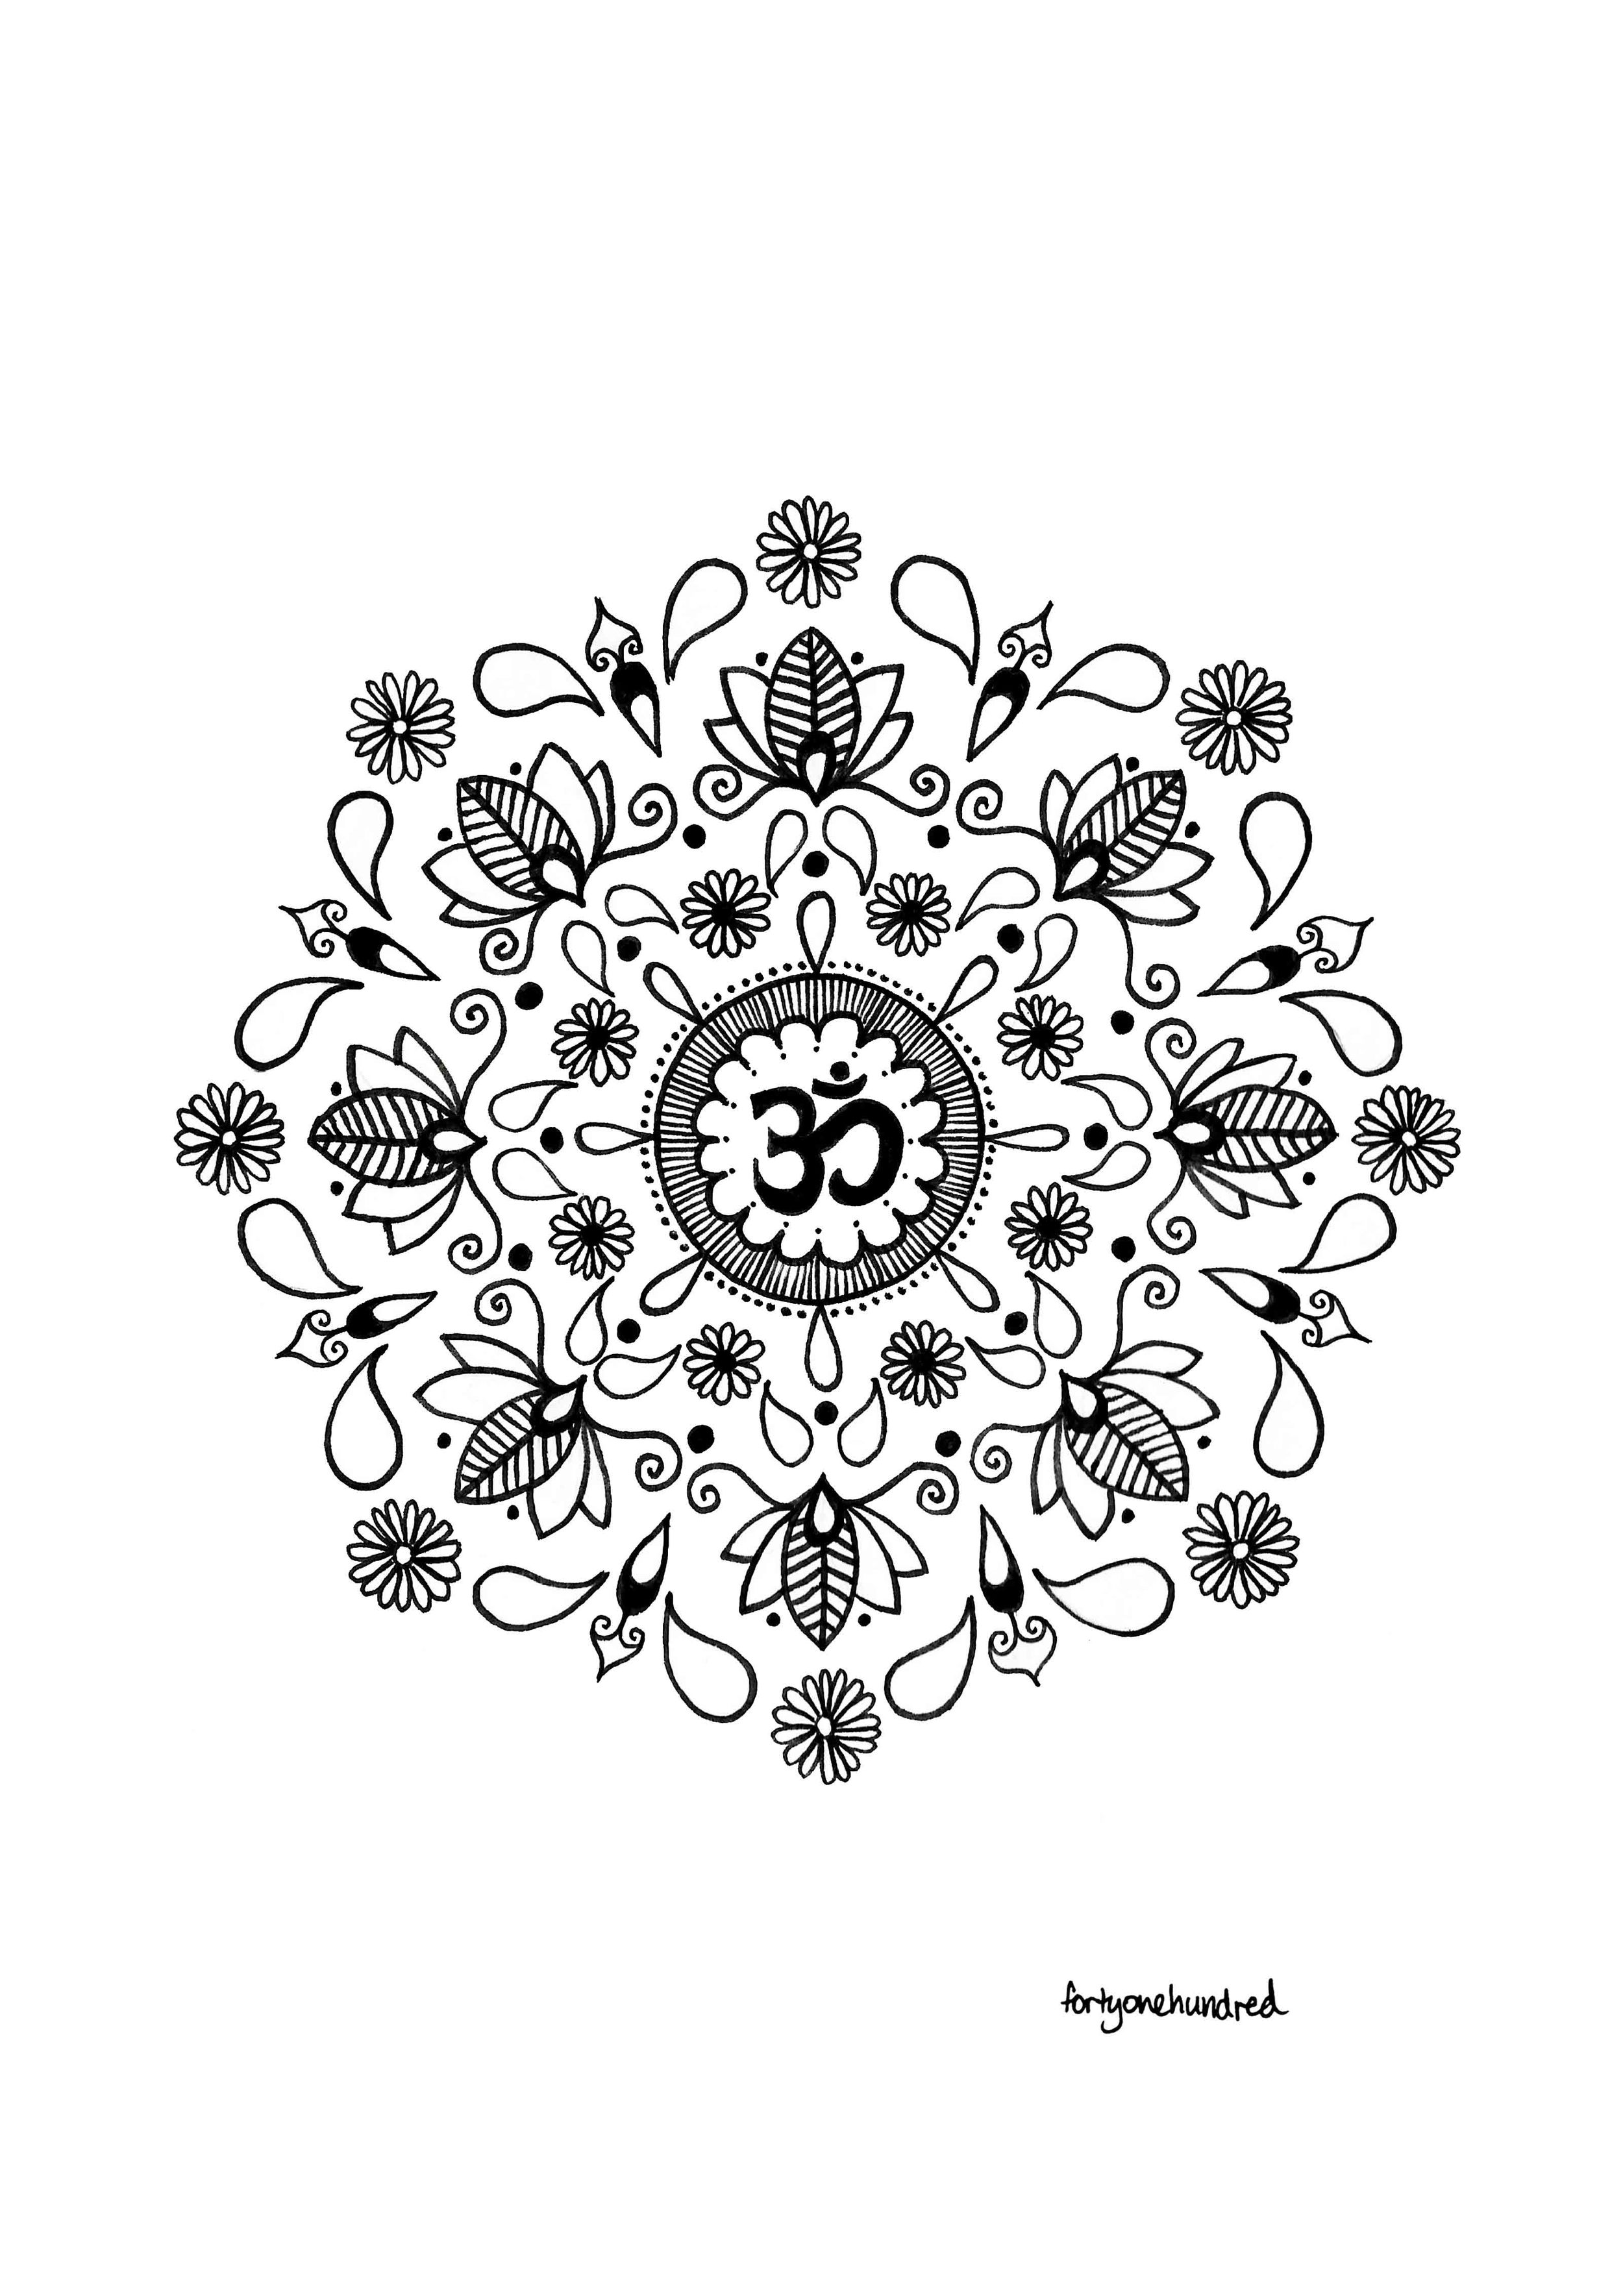 Exploded Floral Mandala.jpg